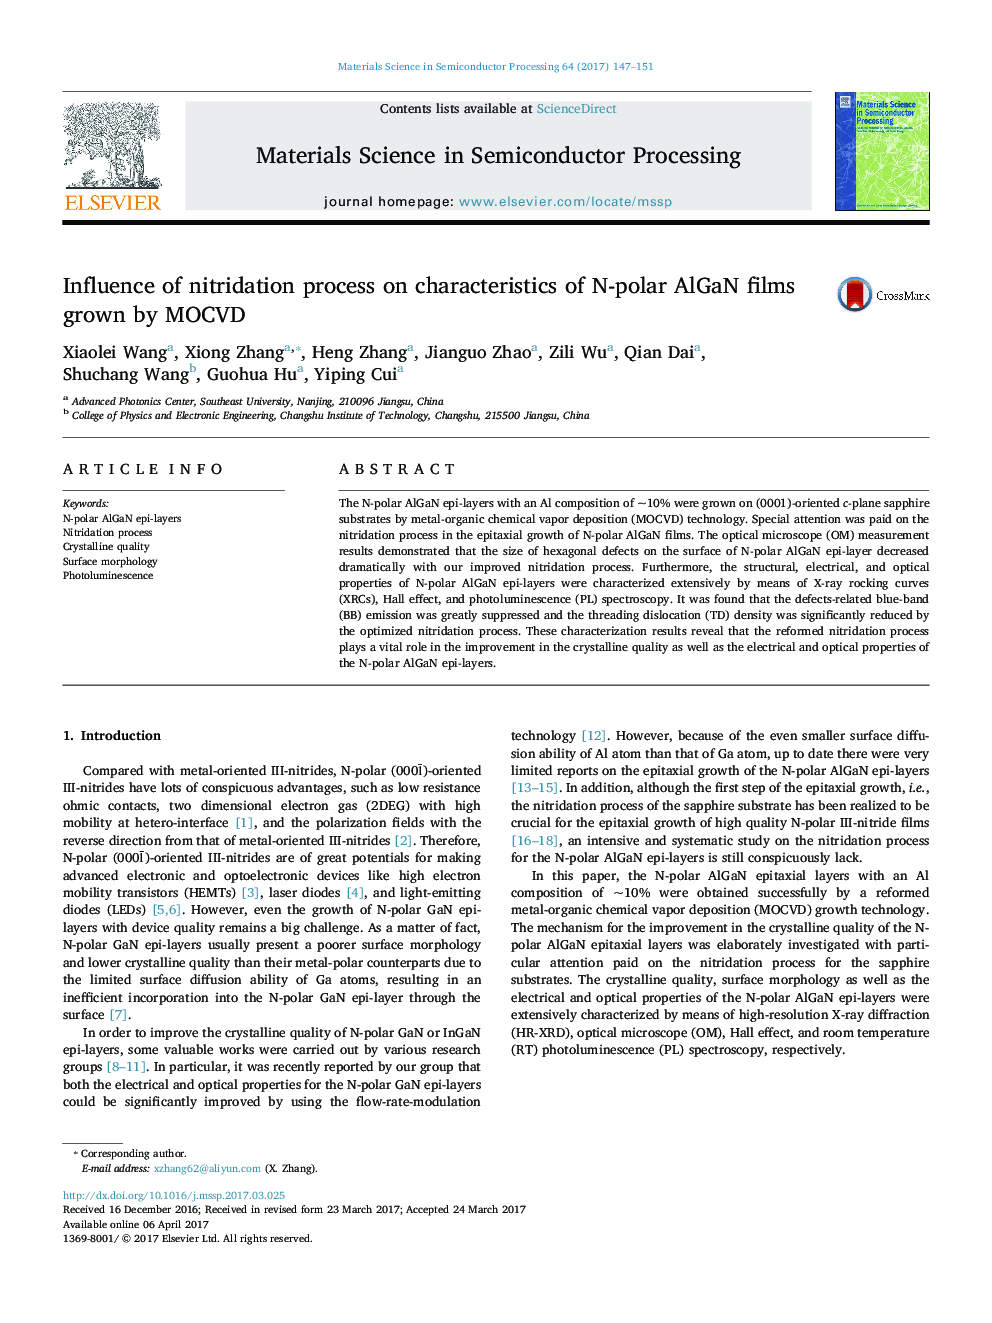 Influence of nitridation process on characteristics of N-polar AlGaN films grown by MOCVD